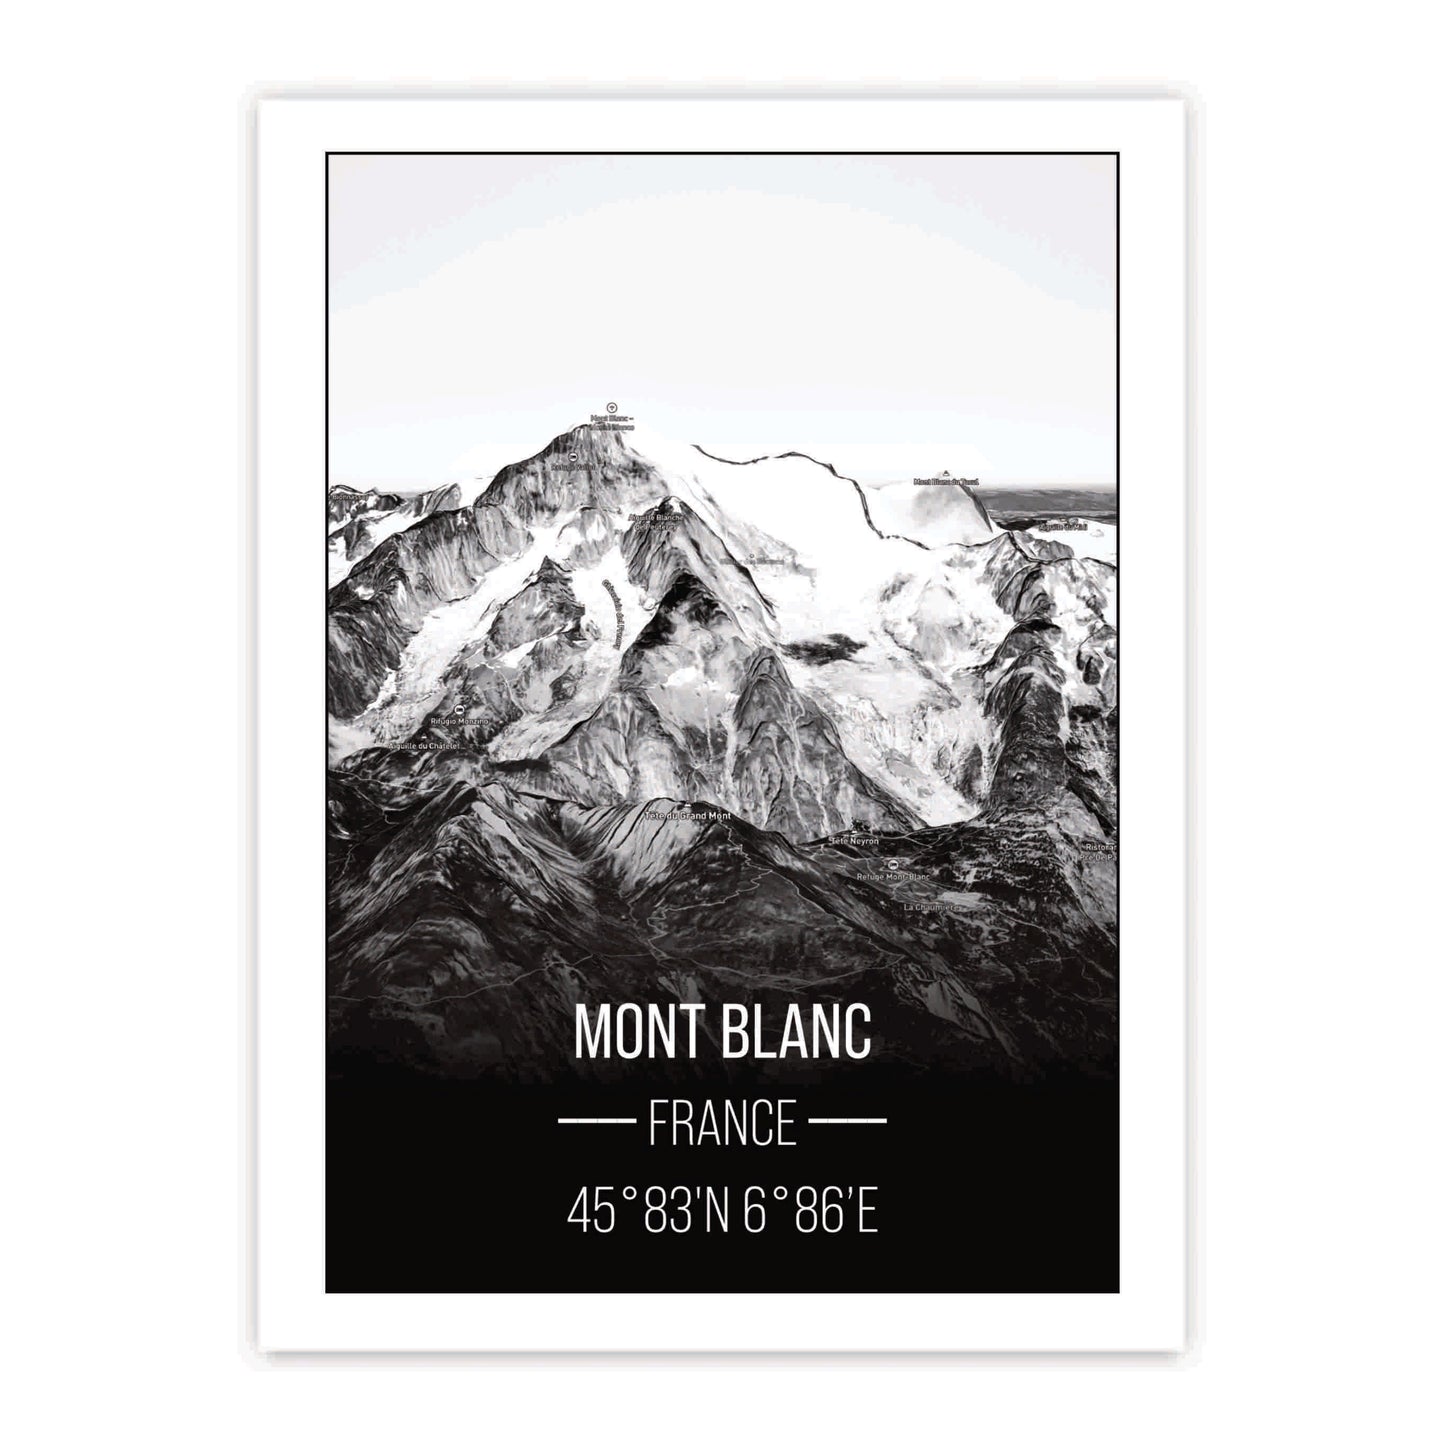 MontBlanc landschappen print